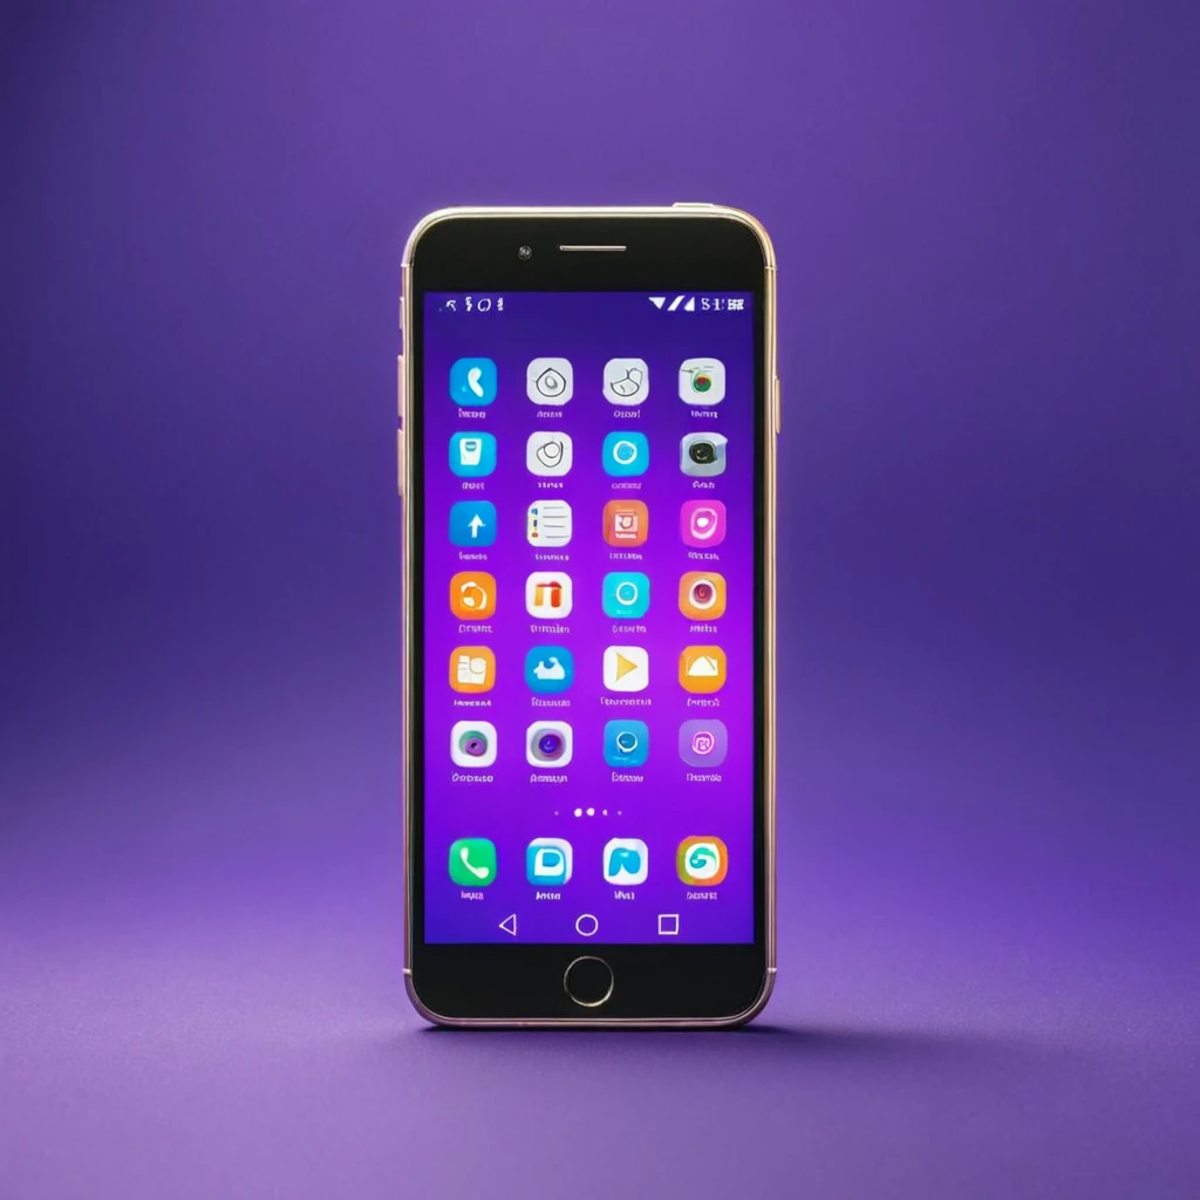 (smartphone showcase) <lora:01_smartphone_showcase:1.1>
Purple background,
high quality, professional, highres, amazing, d...